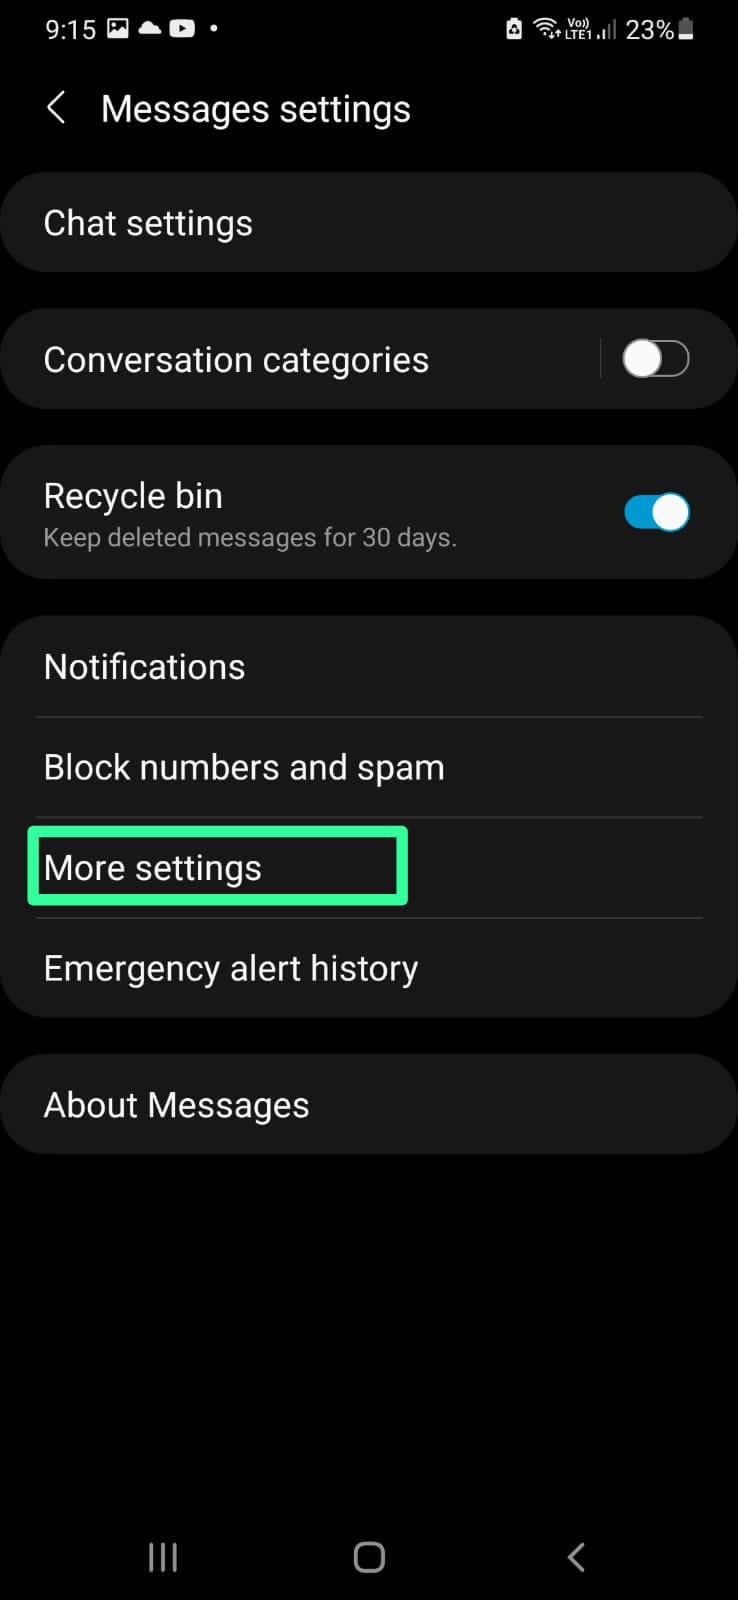 select more settings